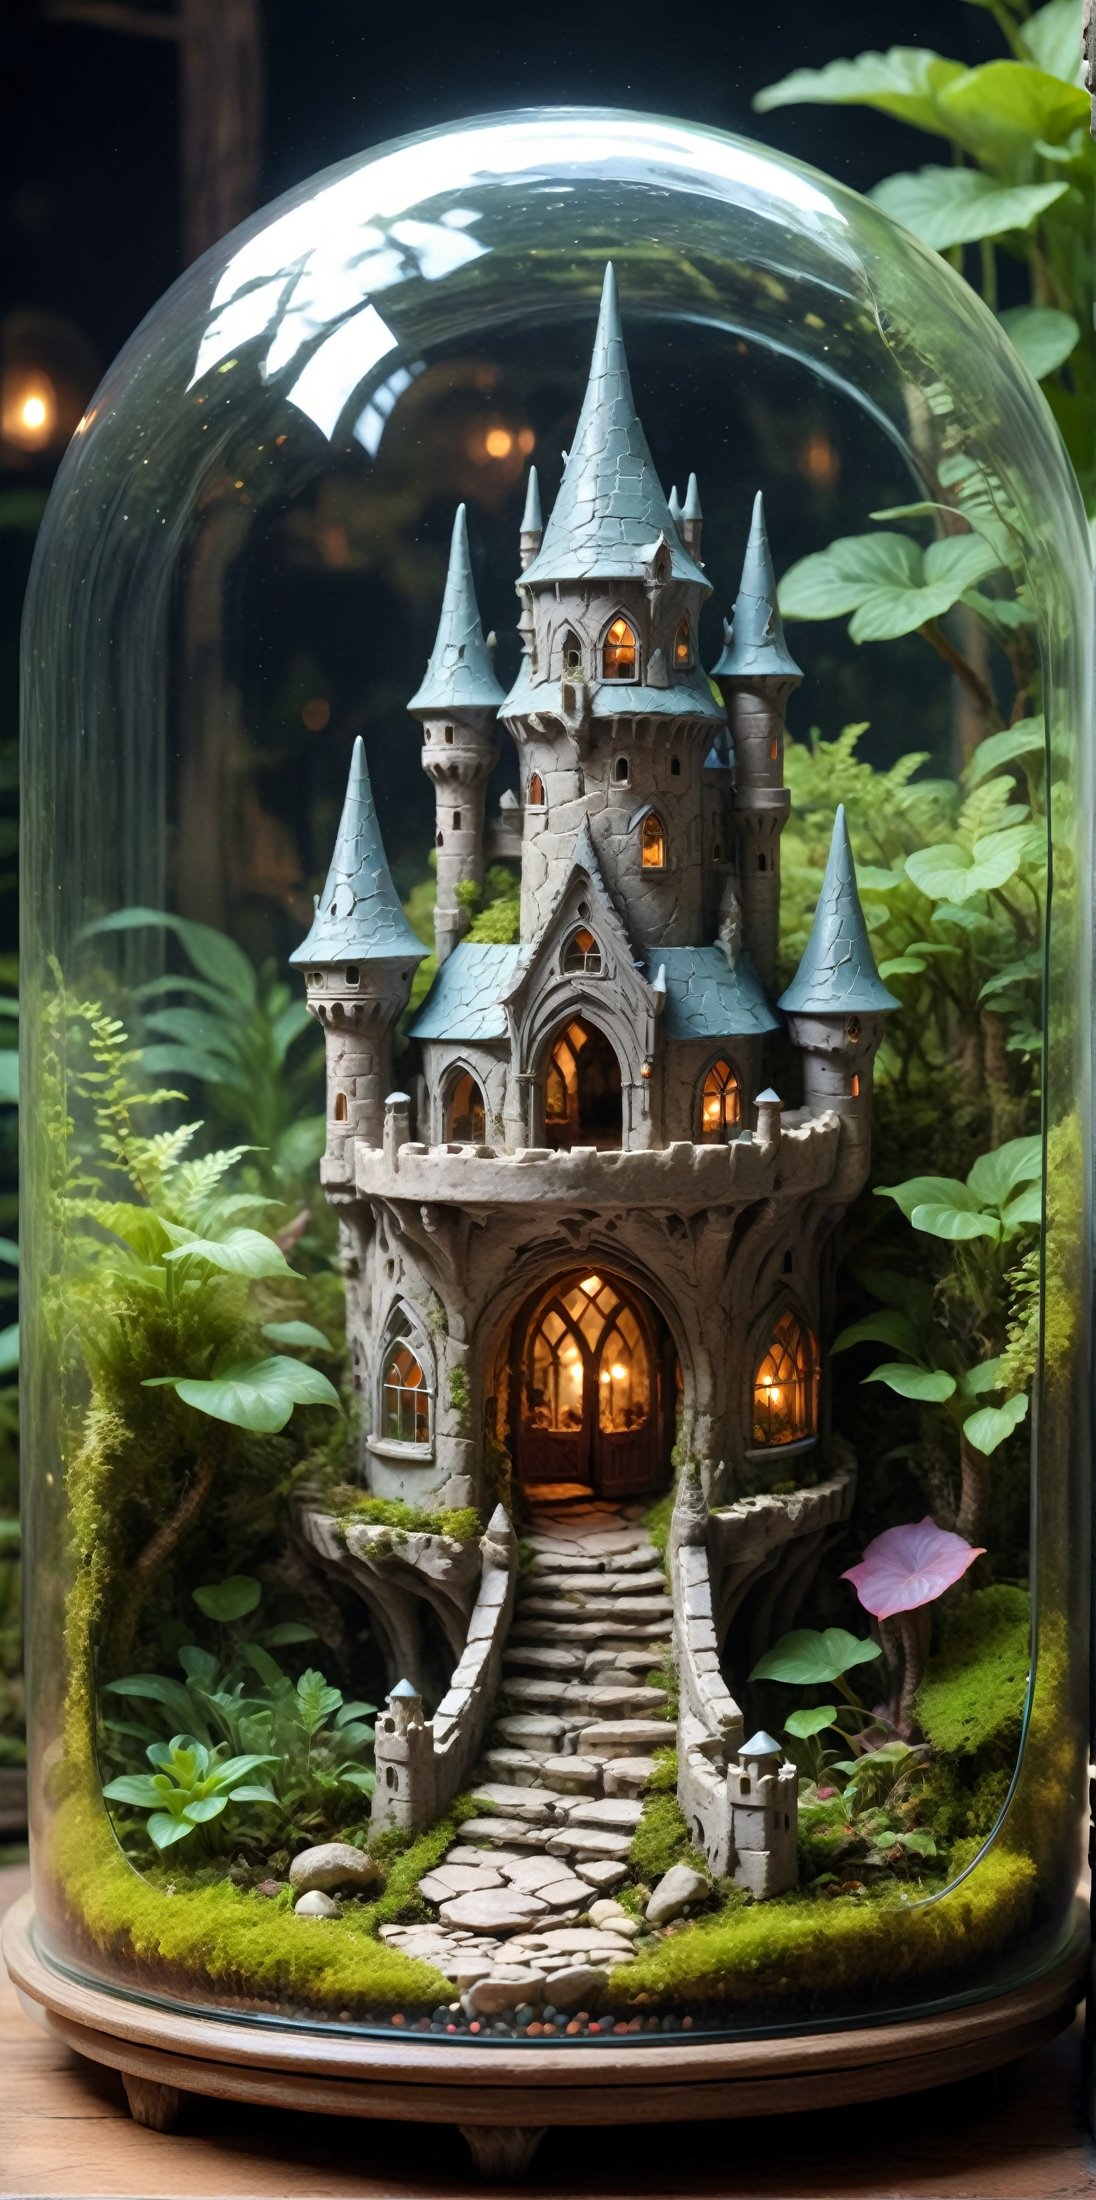 //quality, (masterpiece:1.4), (detailed), ((,best quality,)),//A mini elven castle inside a terrarium, on a table